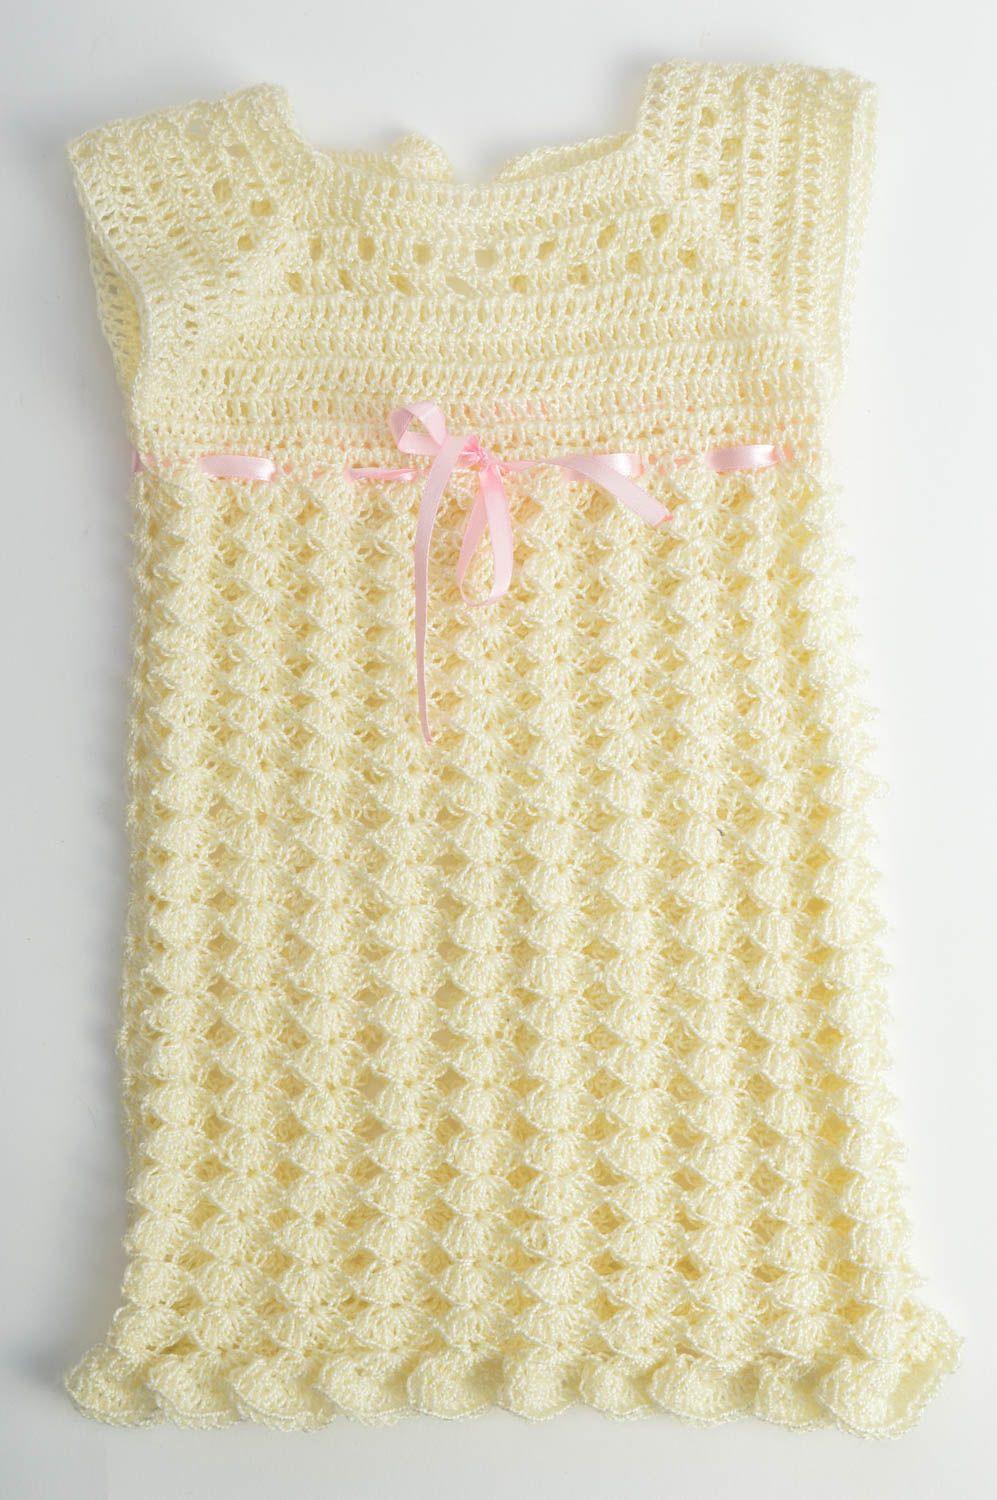 Crocheted baby dress crochet openwork beautiful handmade clothes for children photo 2